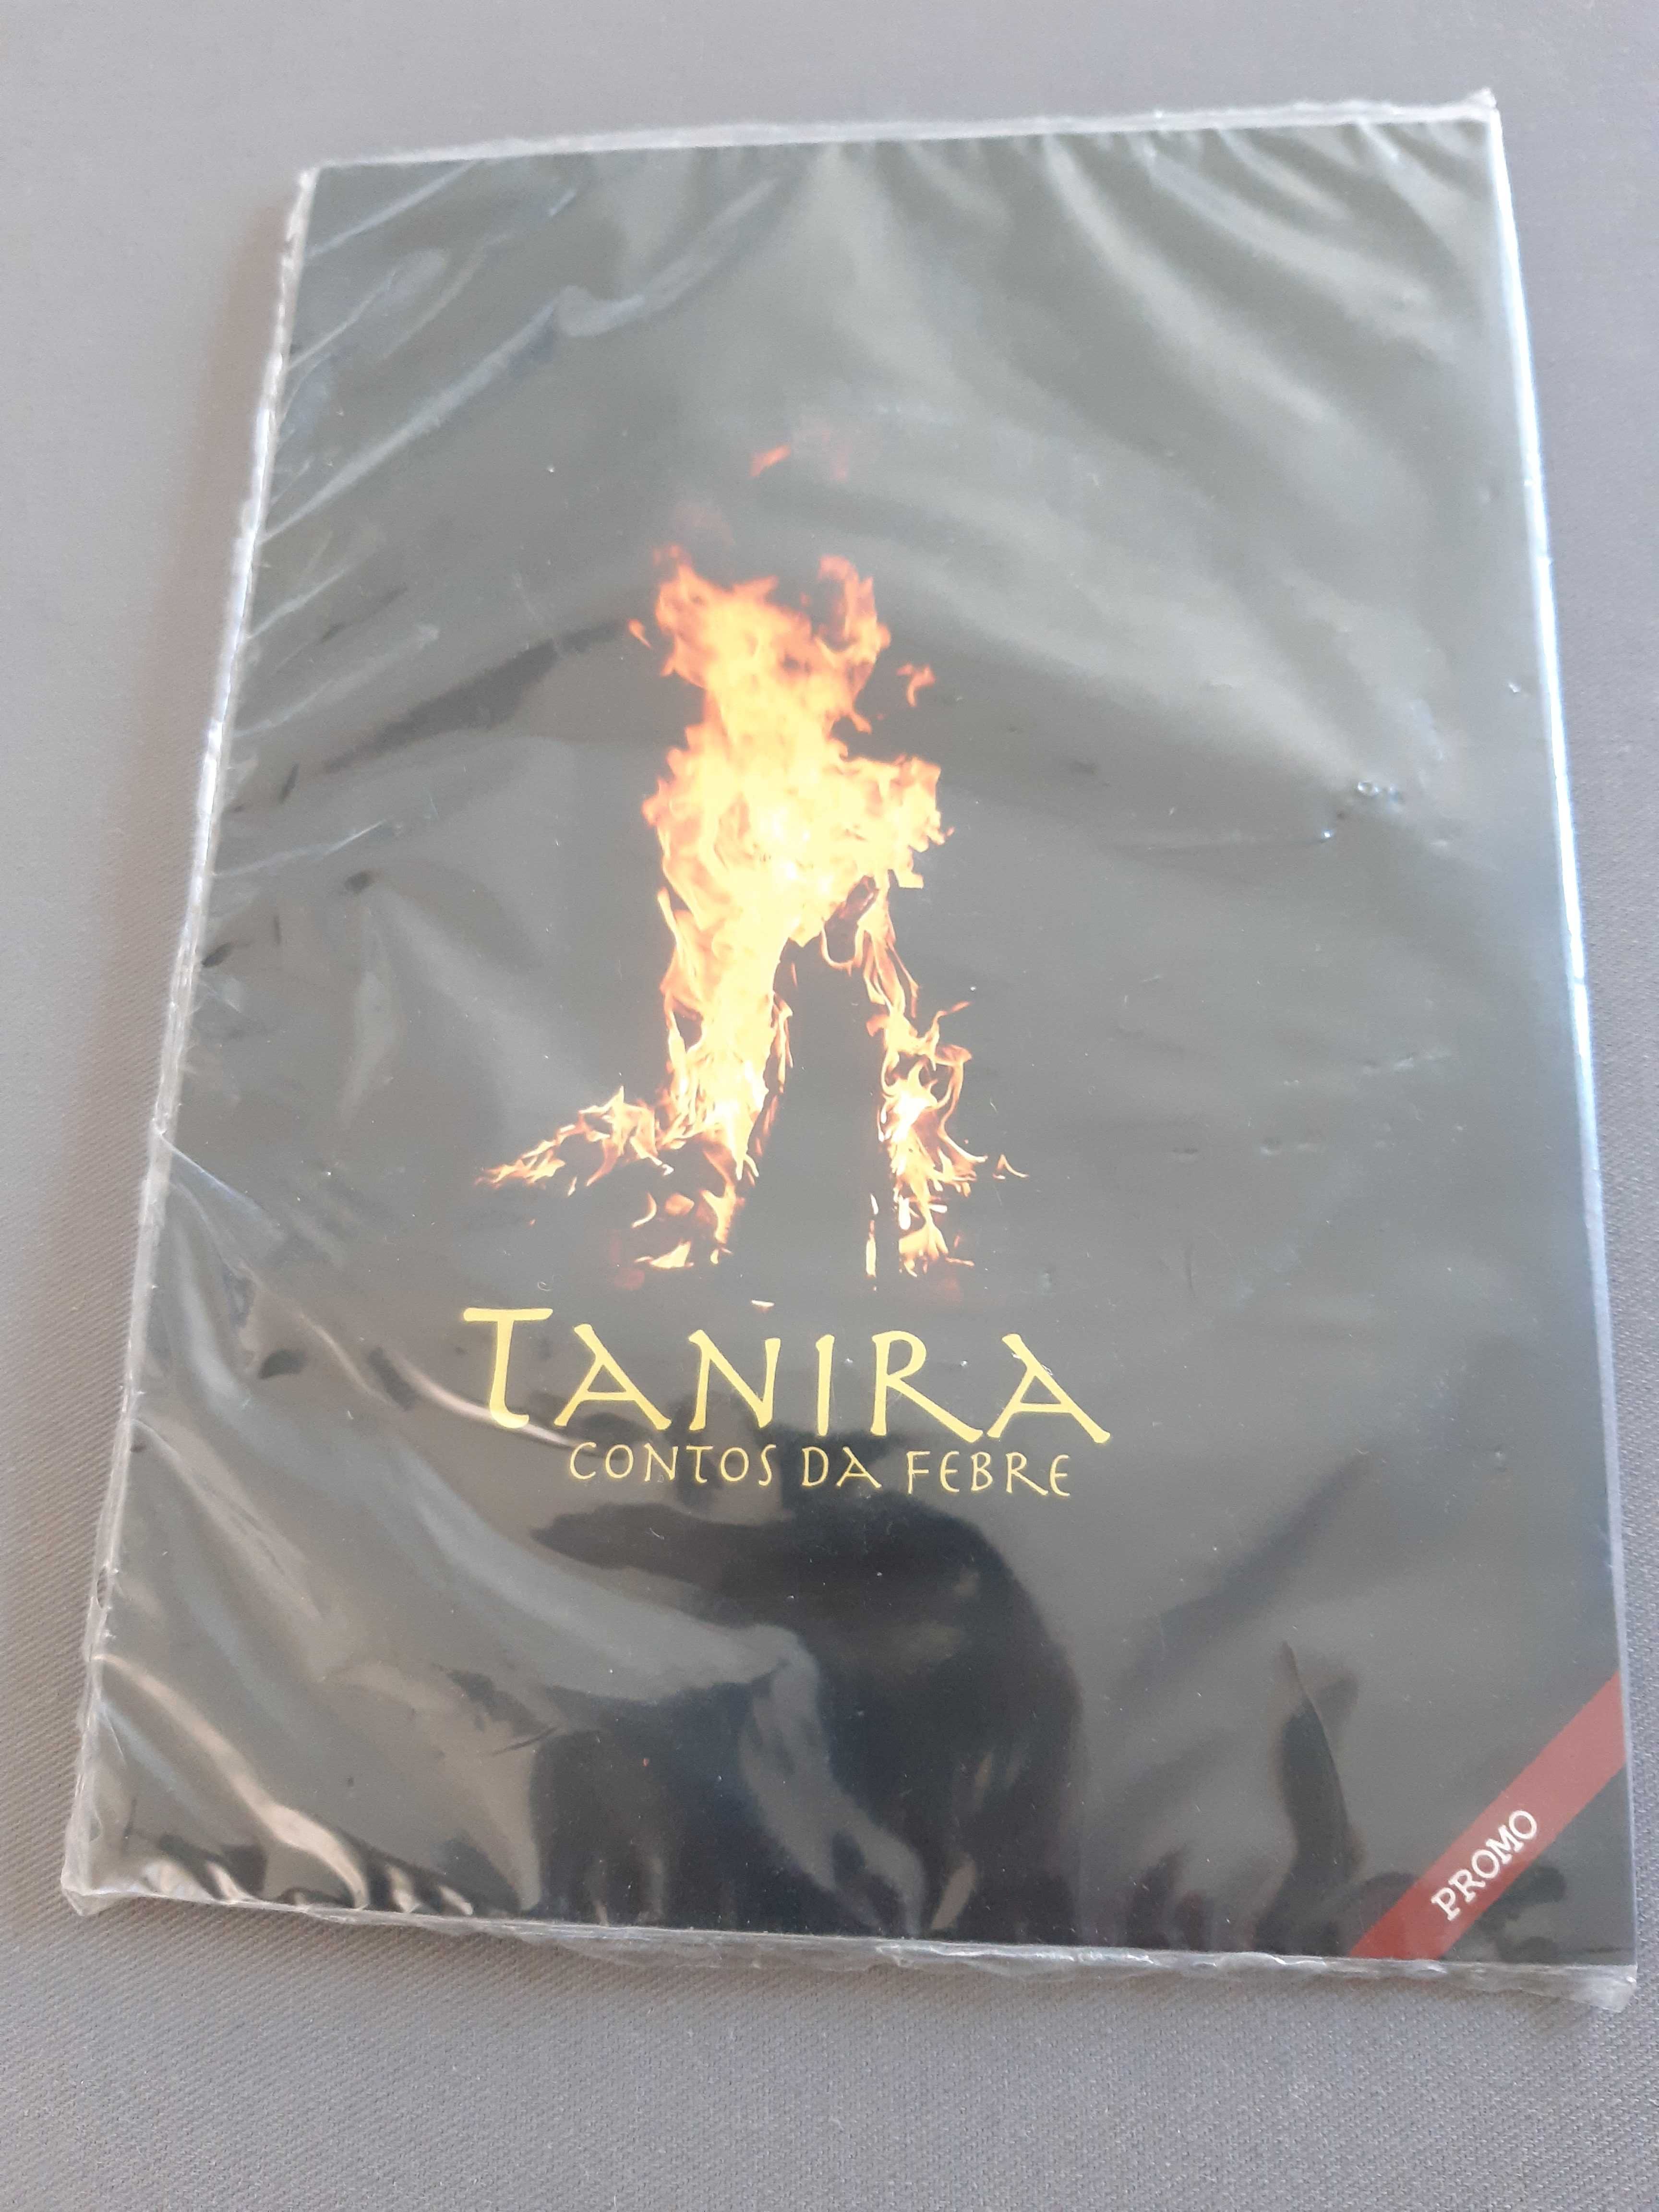 CD Promocional da banda Tanira selado